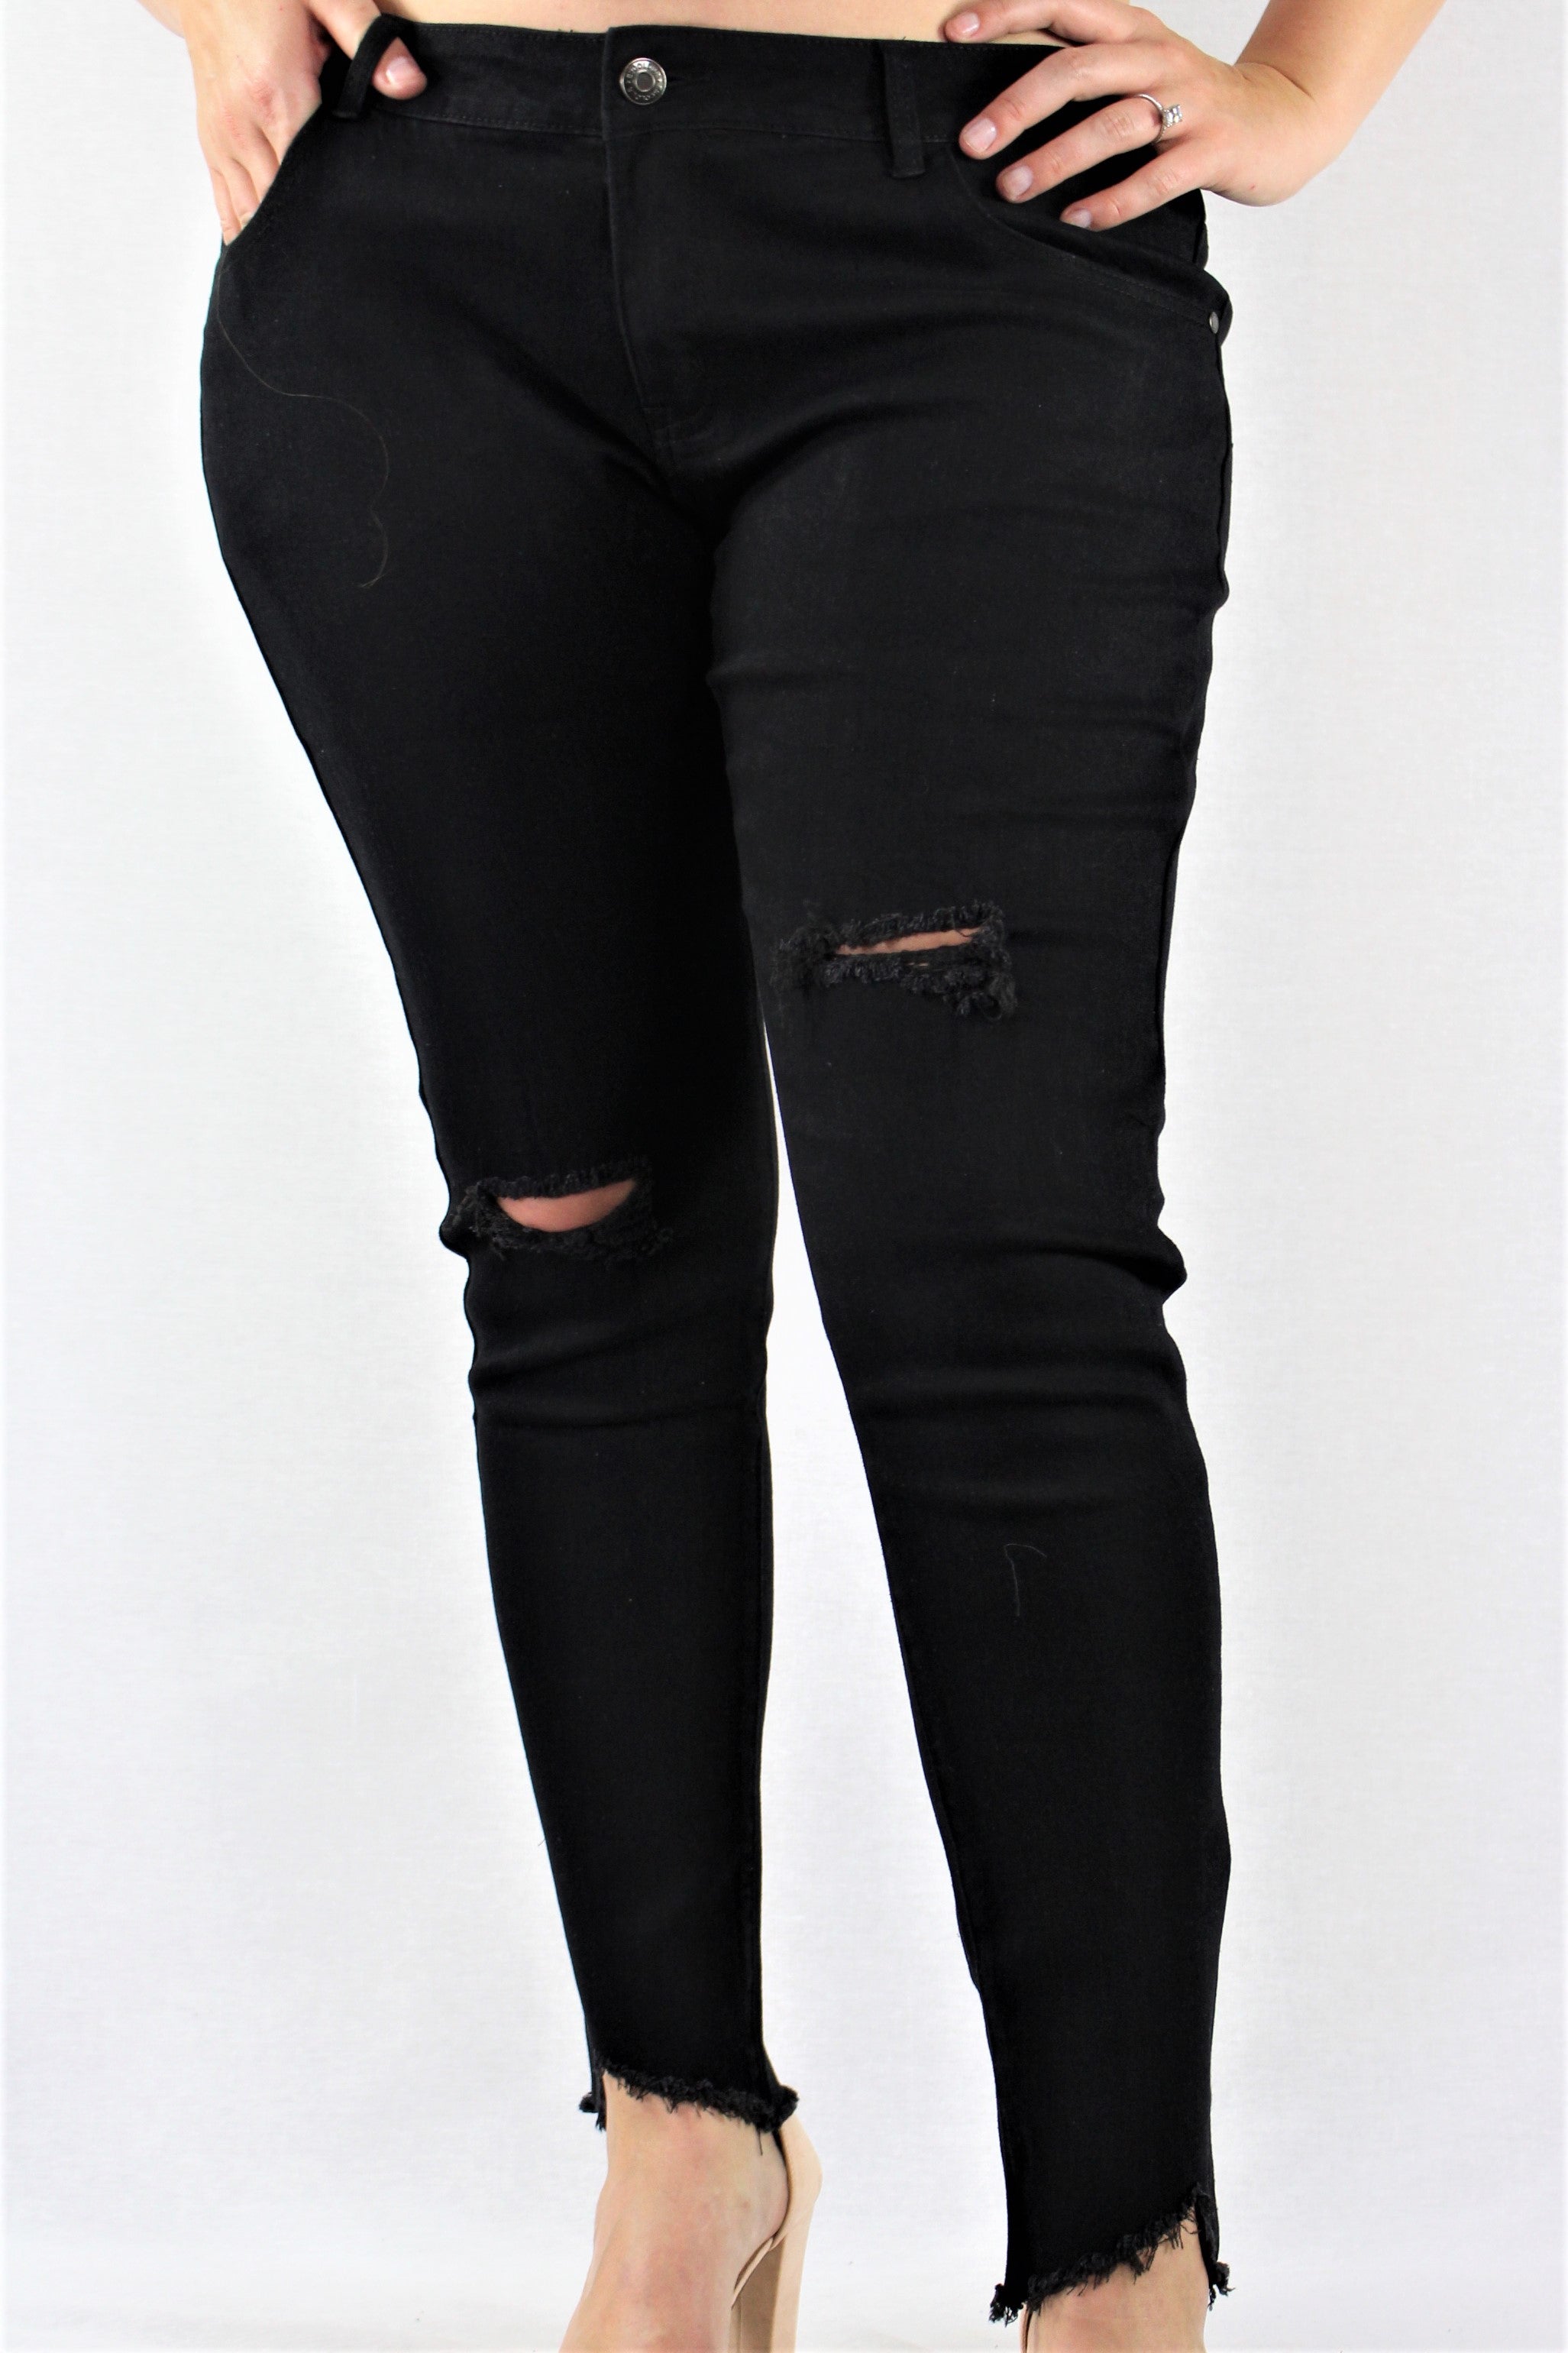 black distressed jeans plus size